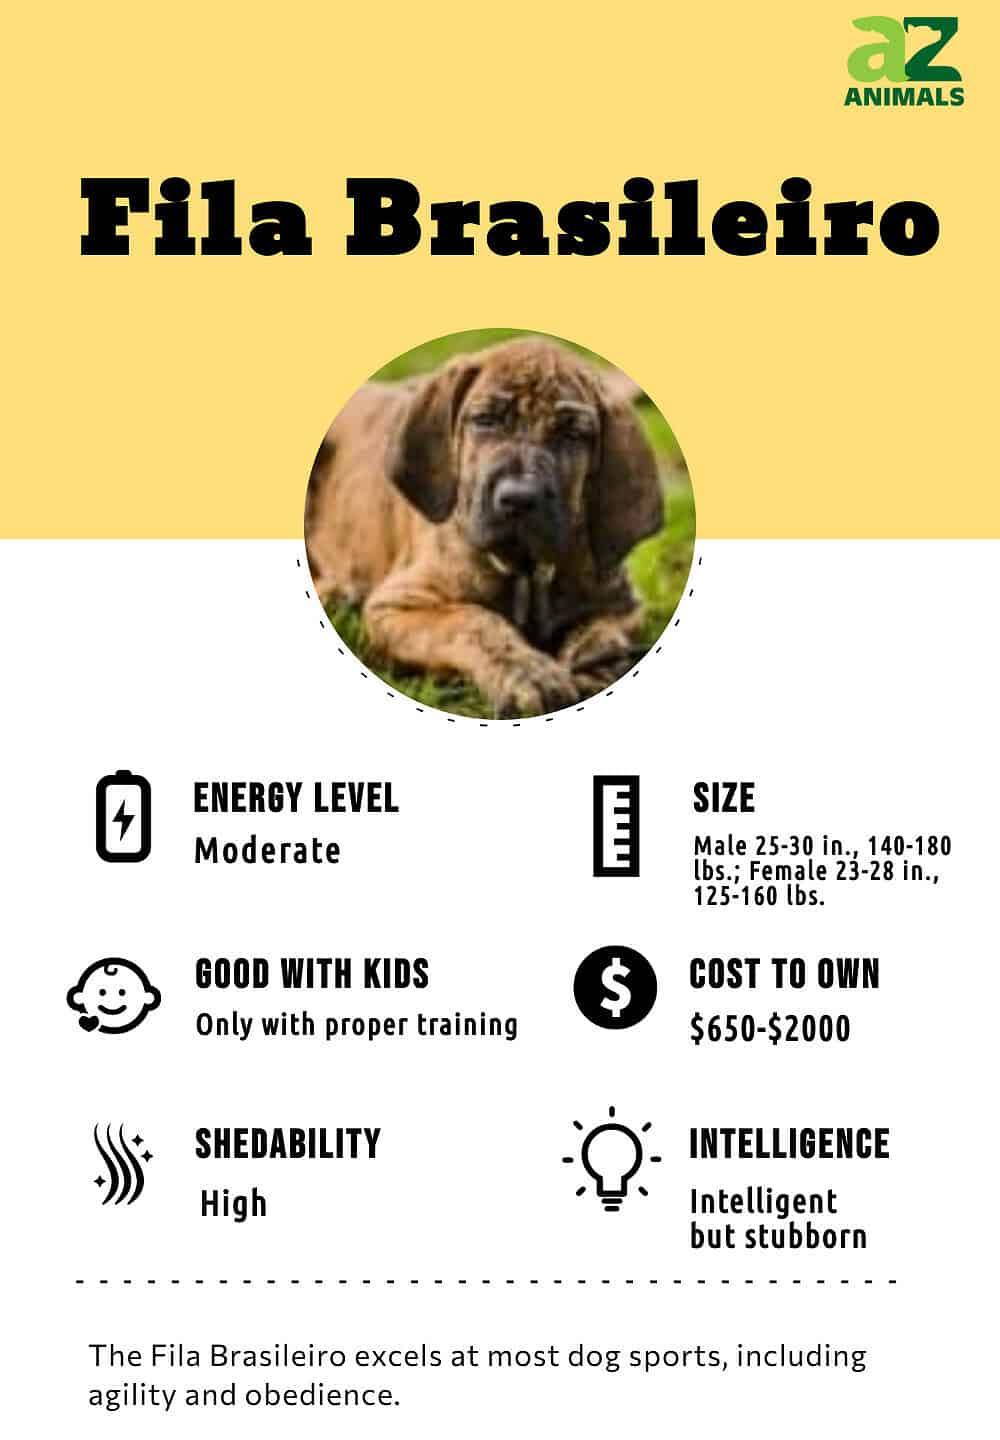 FILA BRASILEIRO Dog Breed 🔥 Characteristics, Care and MORE 